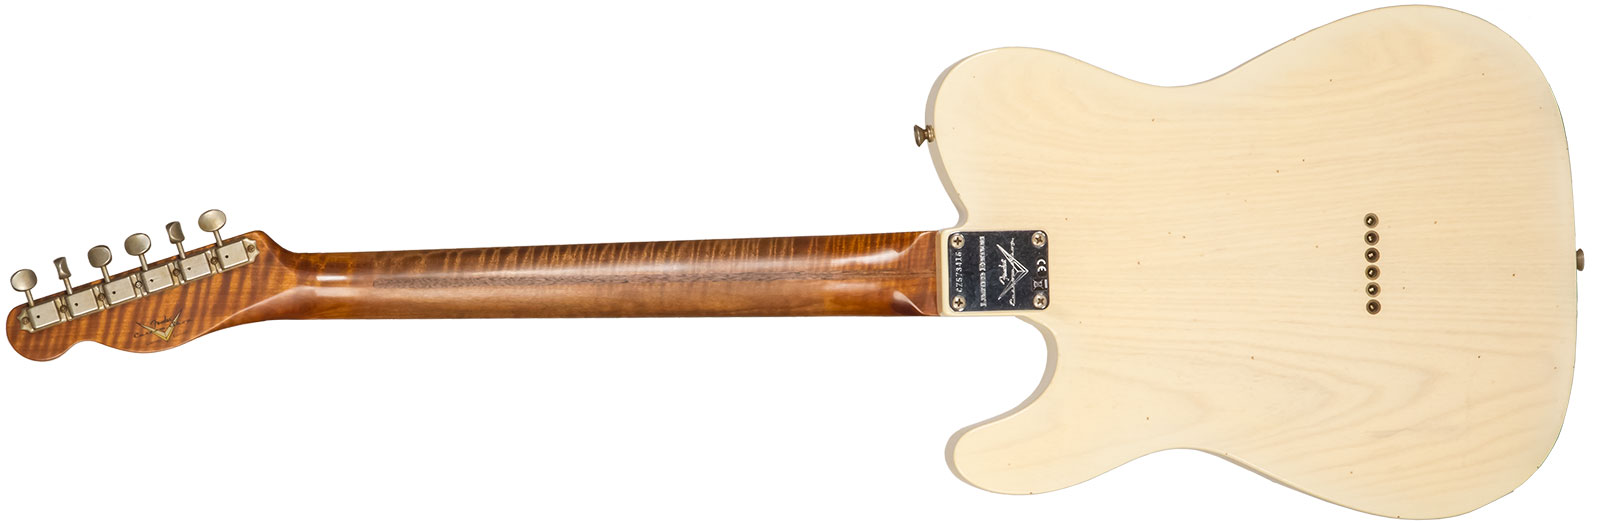 Fender Custom Shop Tele 1955 2s Ht Mn #cz573416 - Journeyman Relic Nocaster Blonde - Guitarra eléctrica con forma de tel - Variation 1